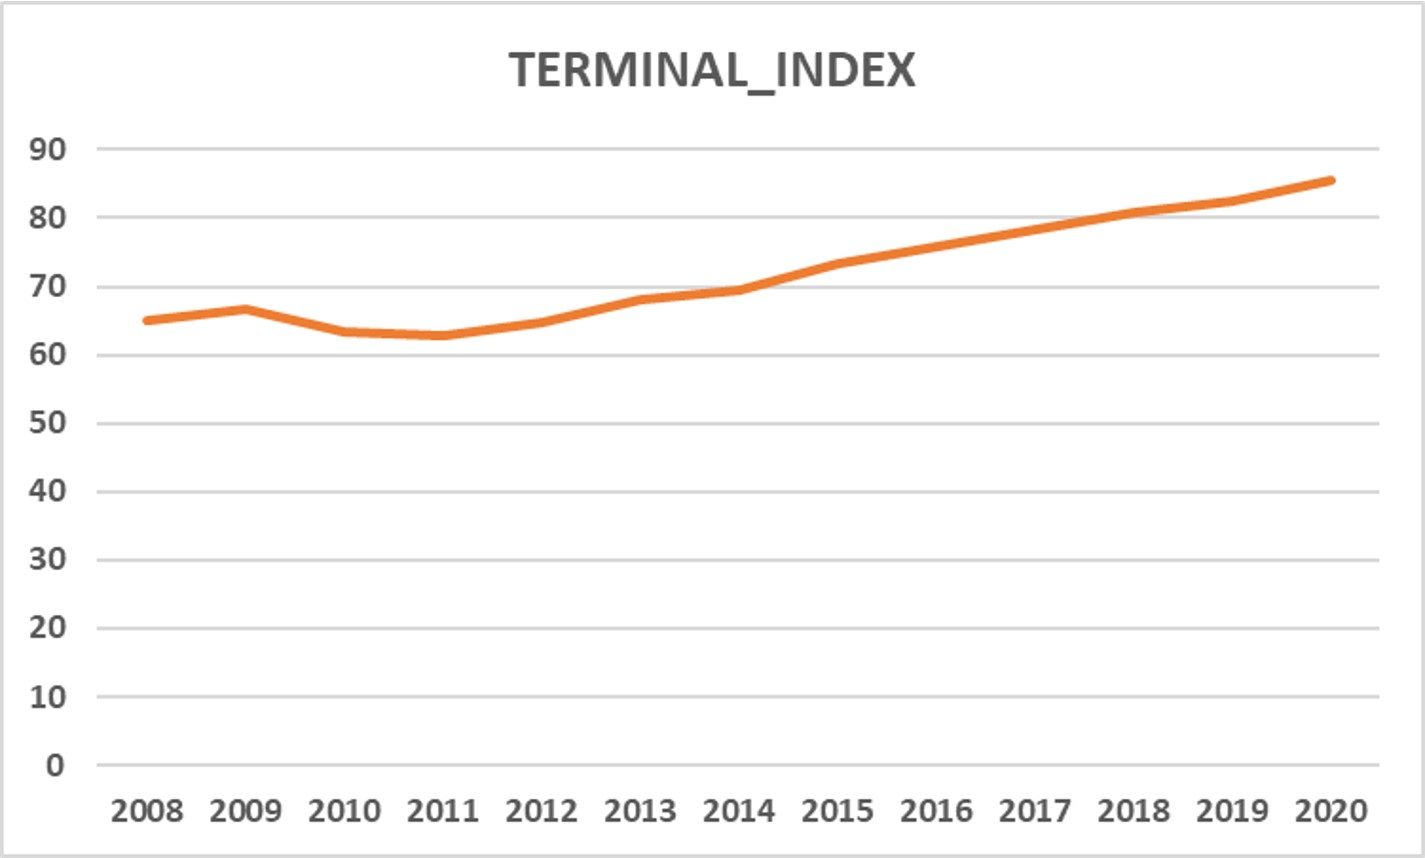 Terminal Index, ICBF figures